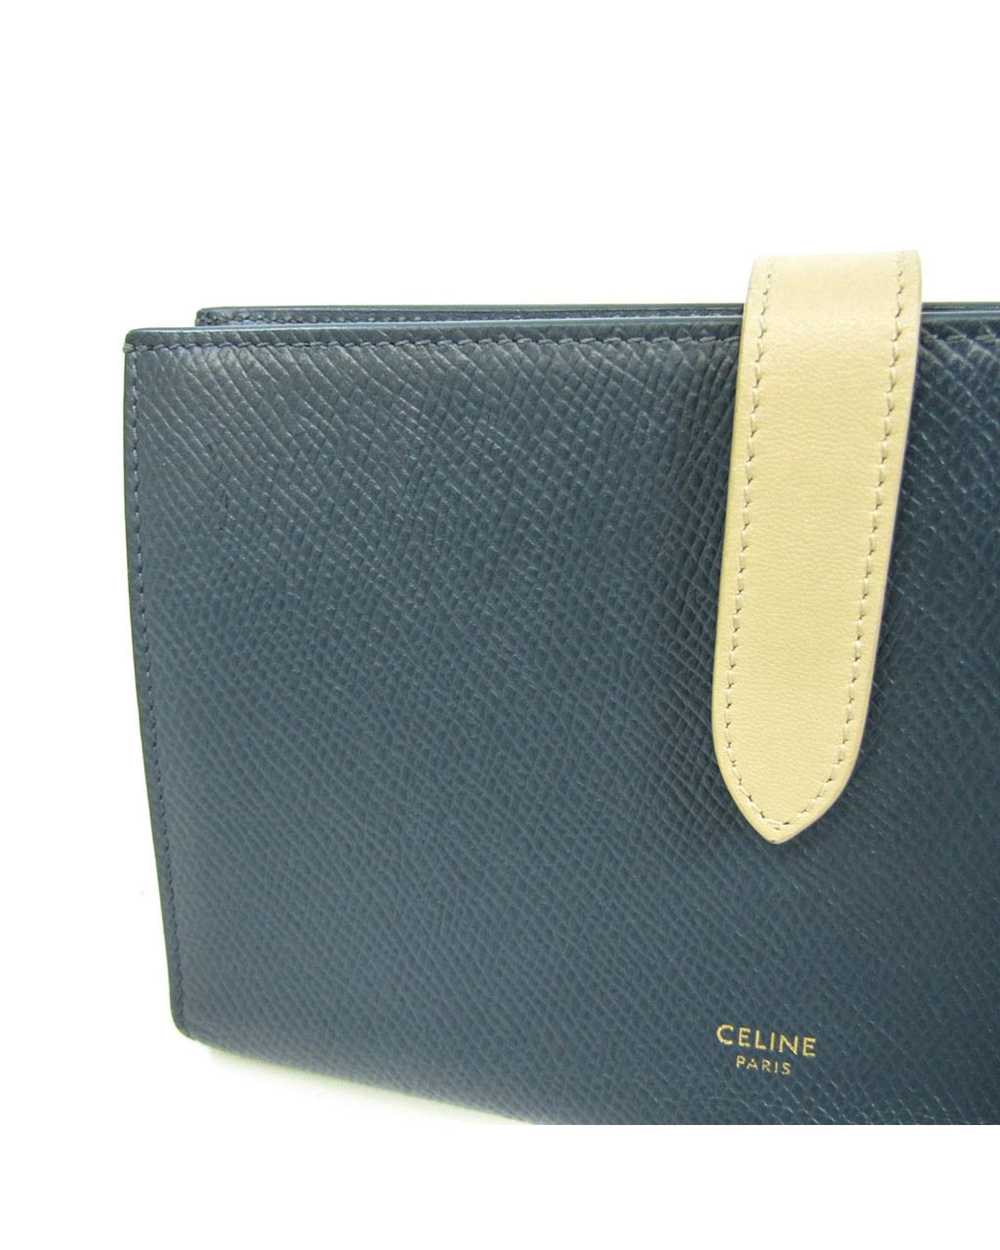 Celine Navy Leather Wallet - Practical and Elegant - image 5